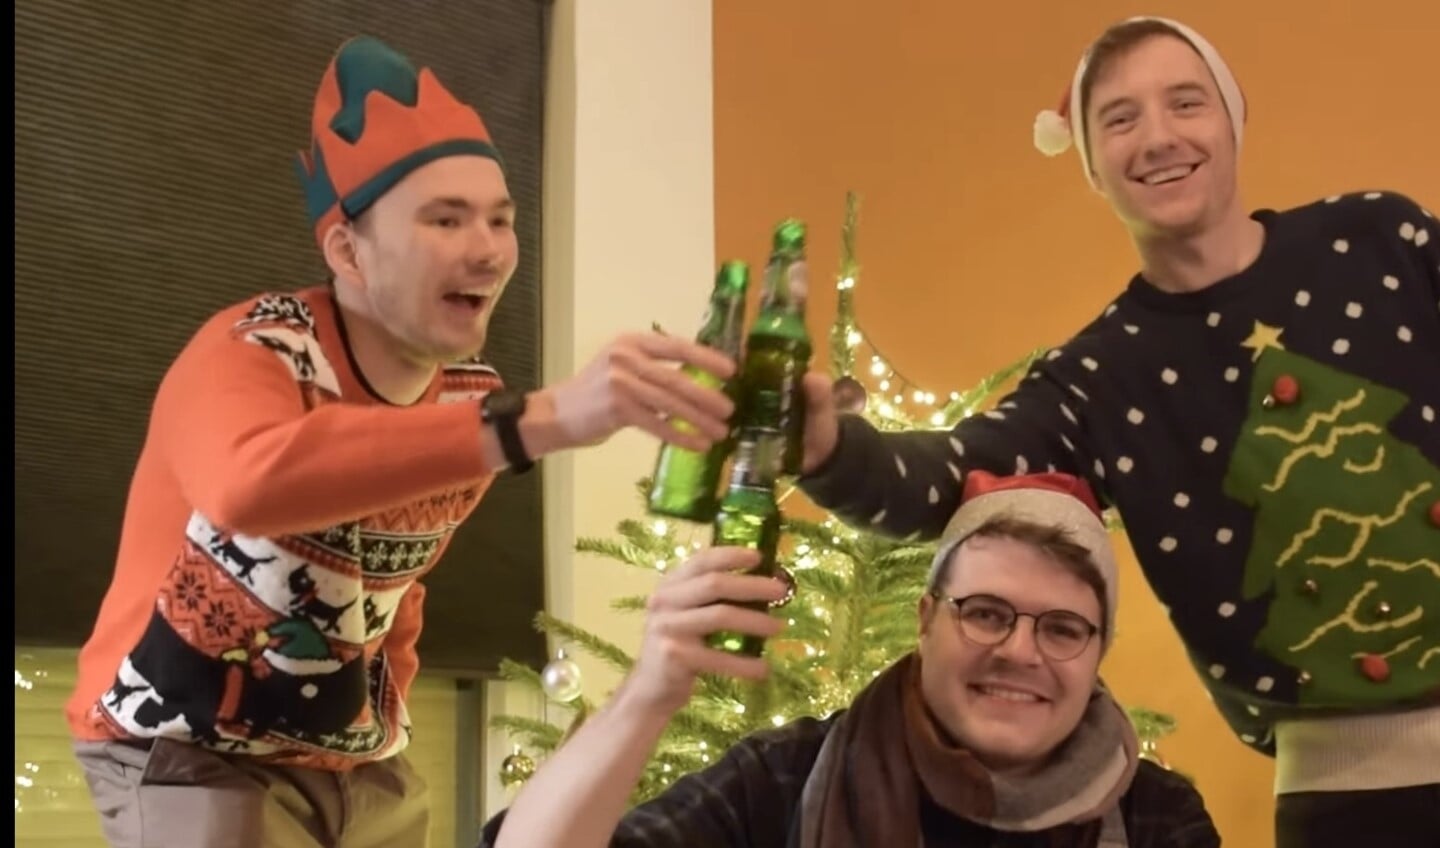 Still uit videoclip 'Kerstfeest, Gerstfeest'  met  vlnr: Kees Roelofsen, Tom Schepers en Jan Willem Kolkman.